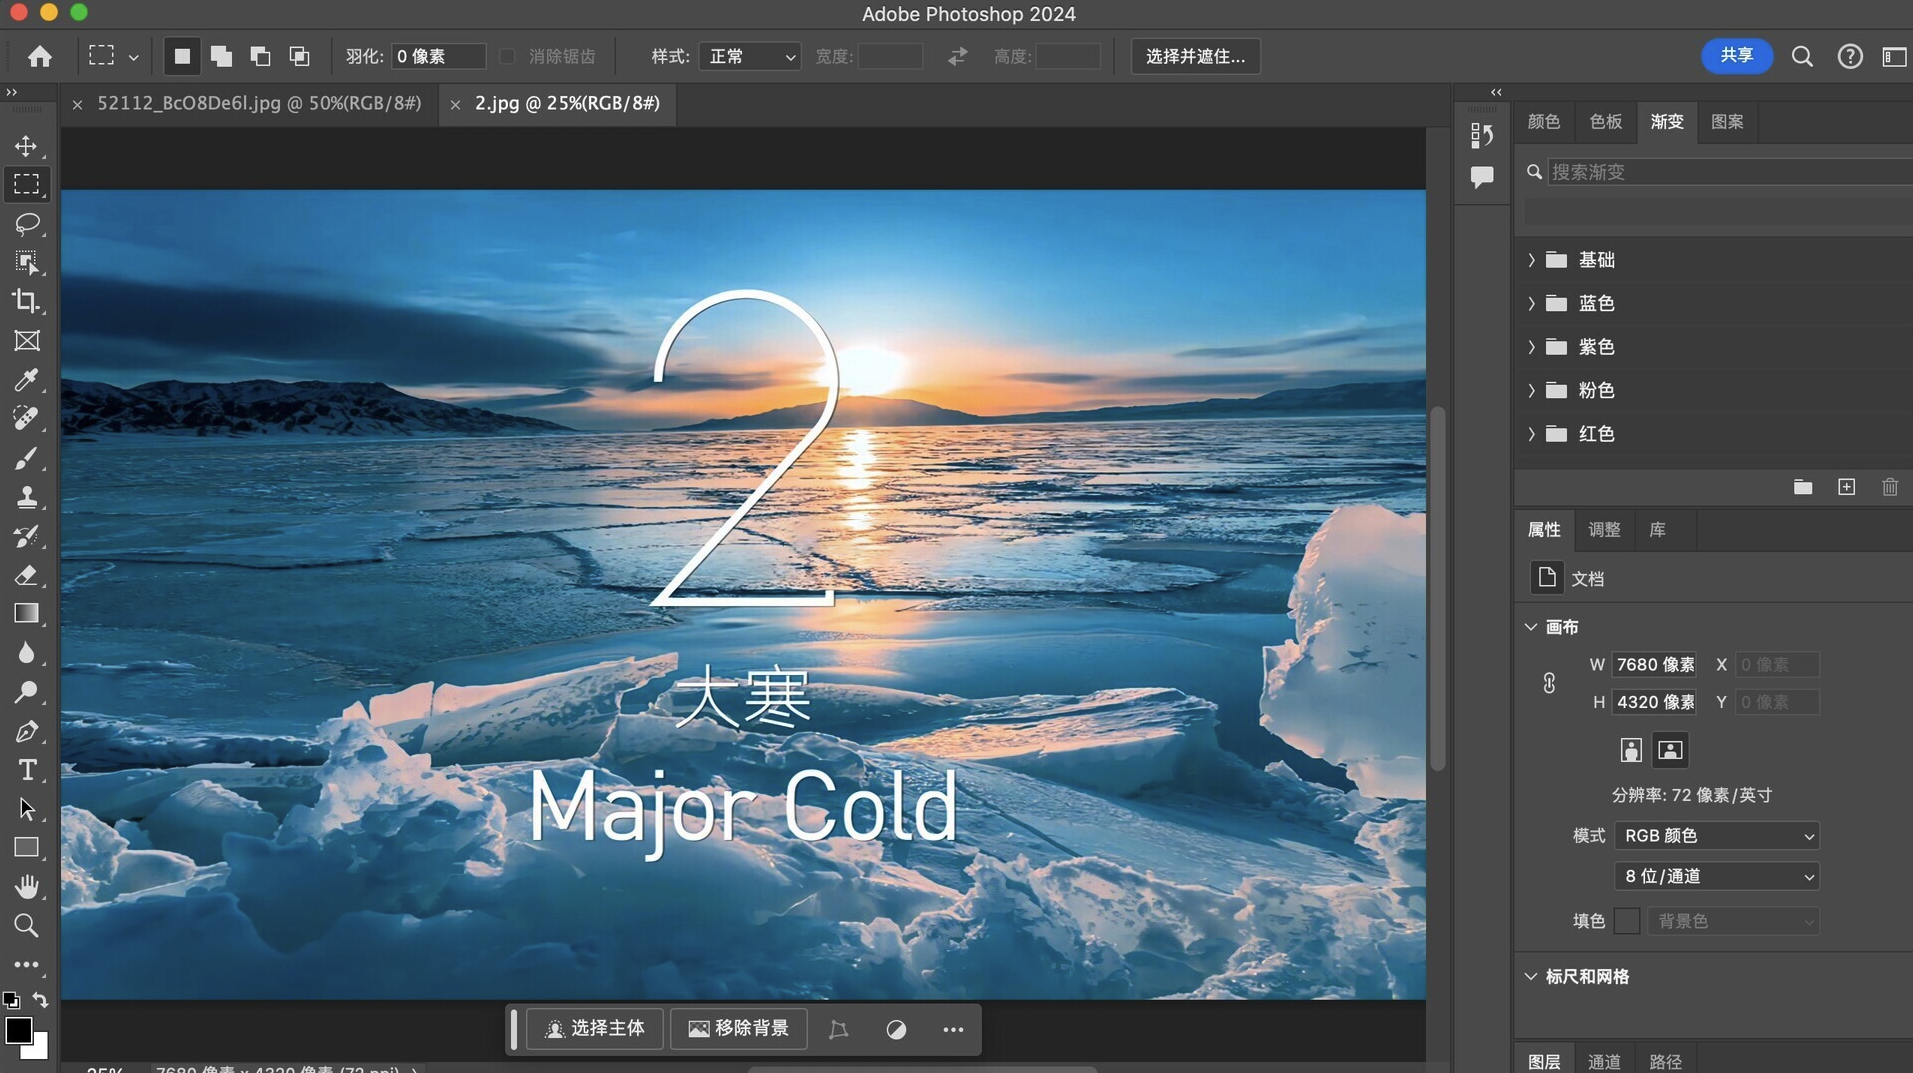 Adobe Photoshop 2024 for Mac - Ps图像处理软件 破解版-1